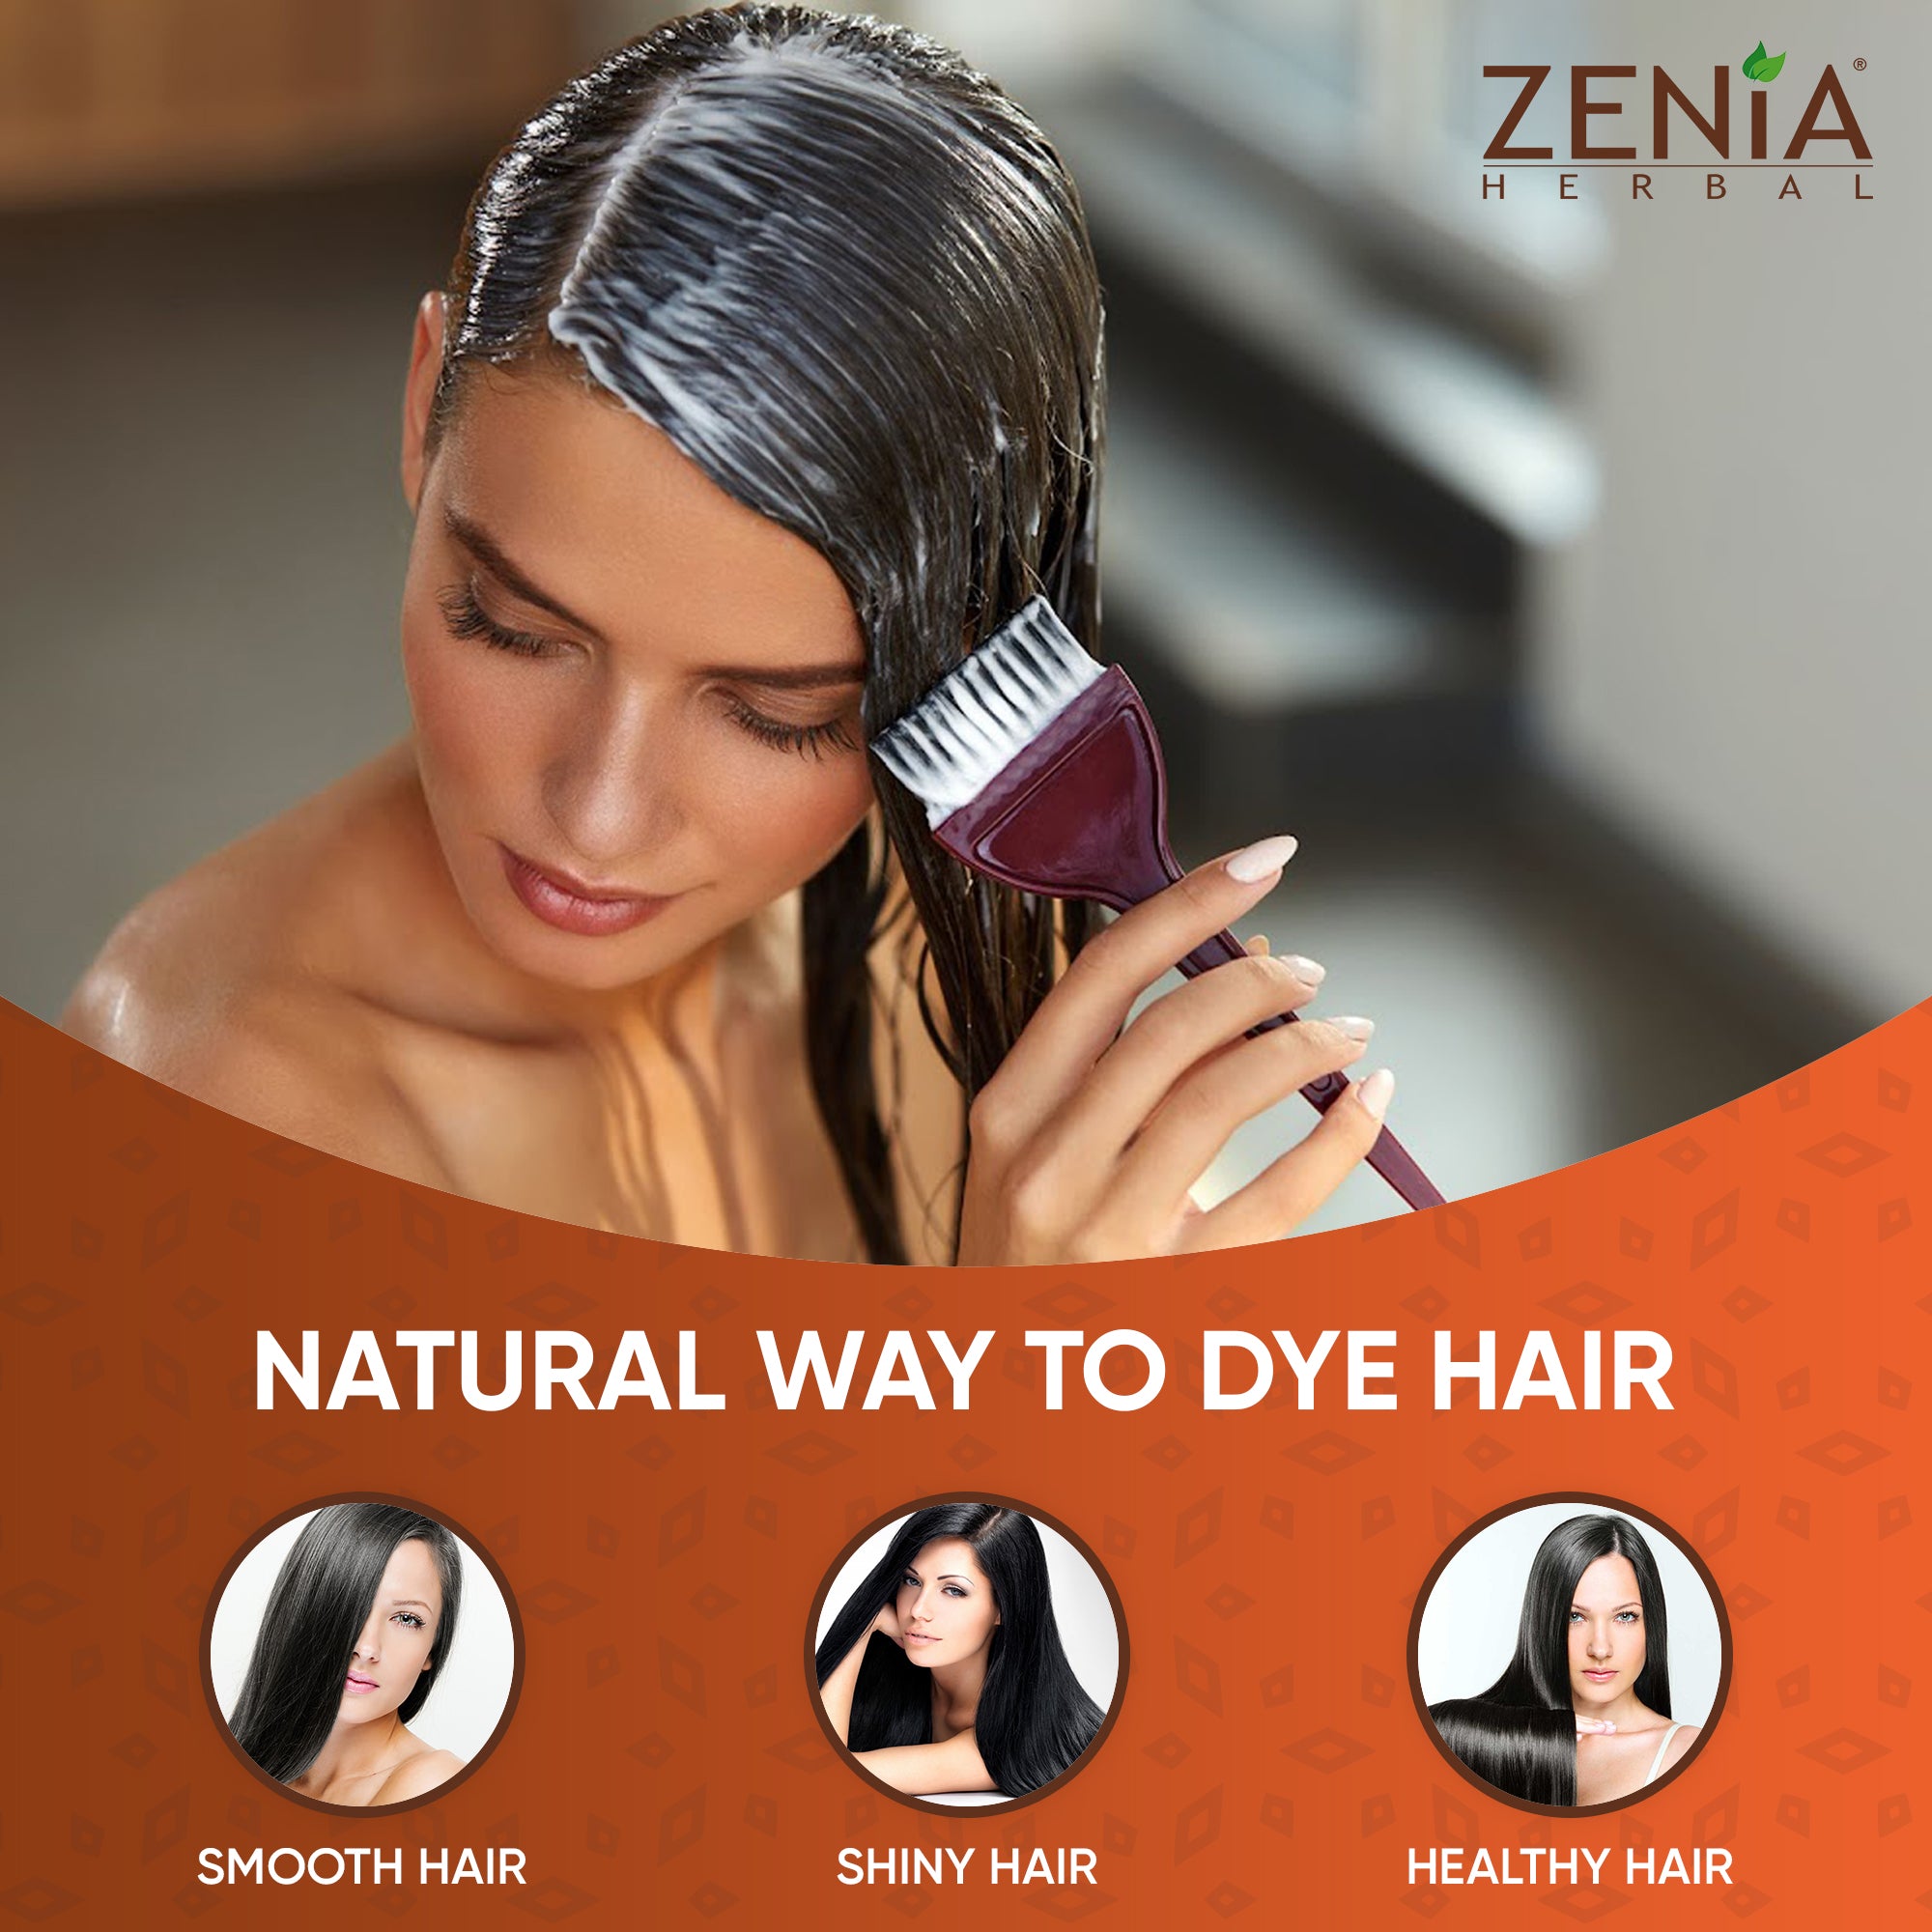 Zenia 100% Pure Indigo Powder and Henna Powder Hair Color Combo Kit 100 Grams Each 2022 Crop